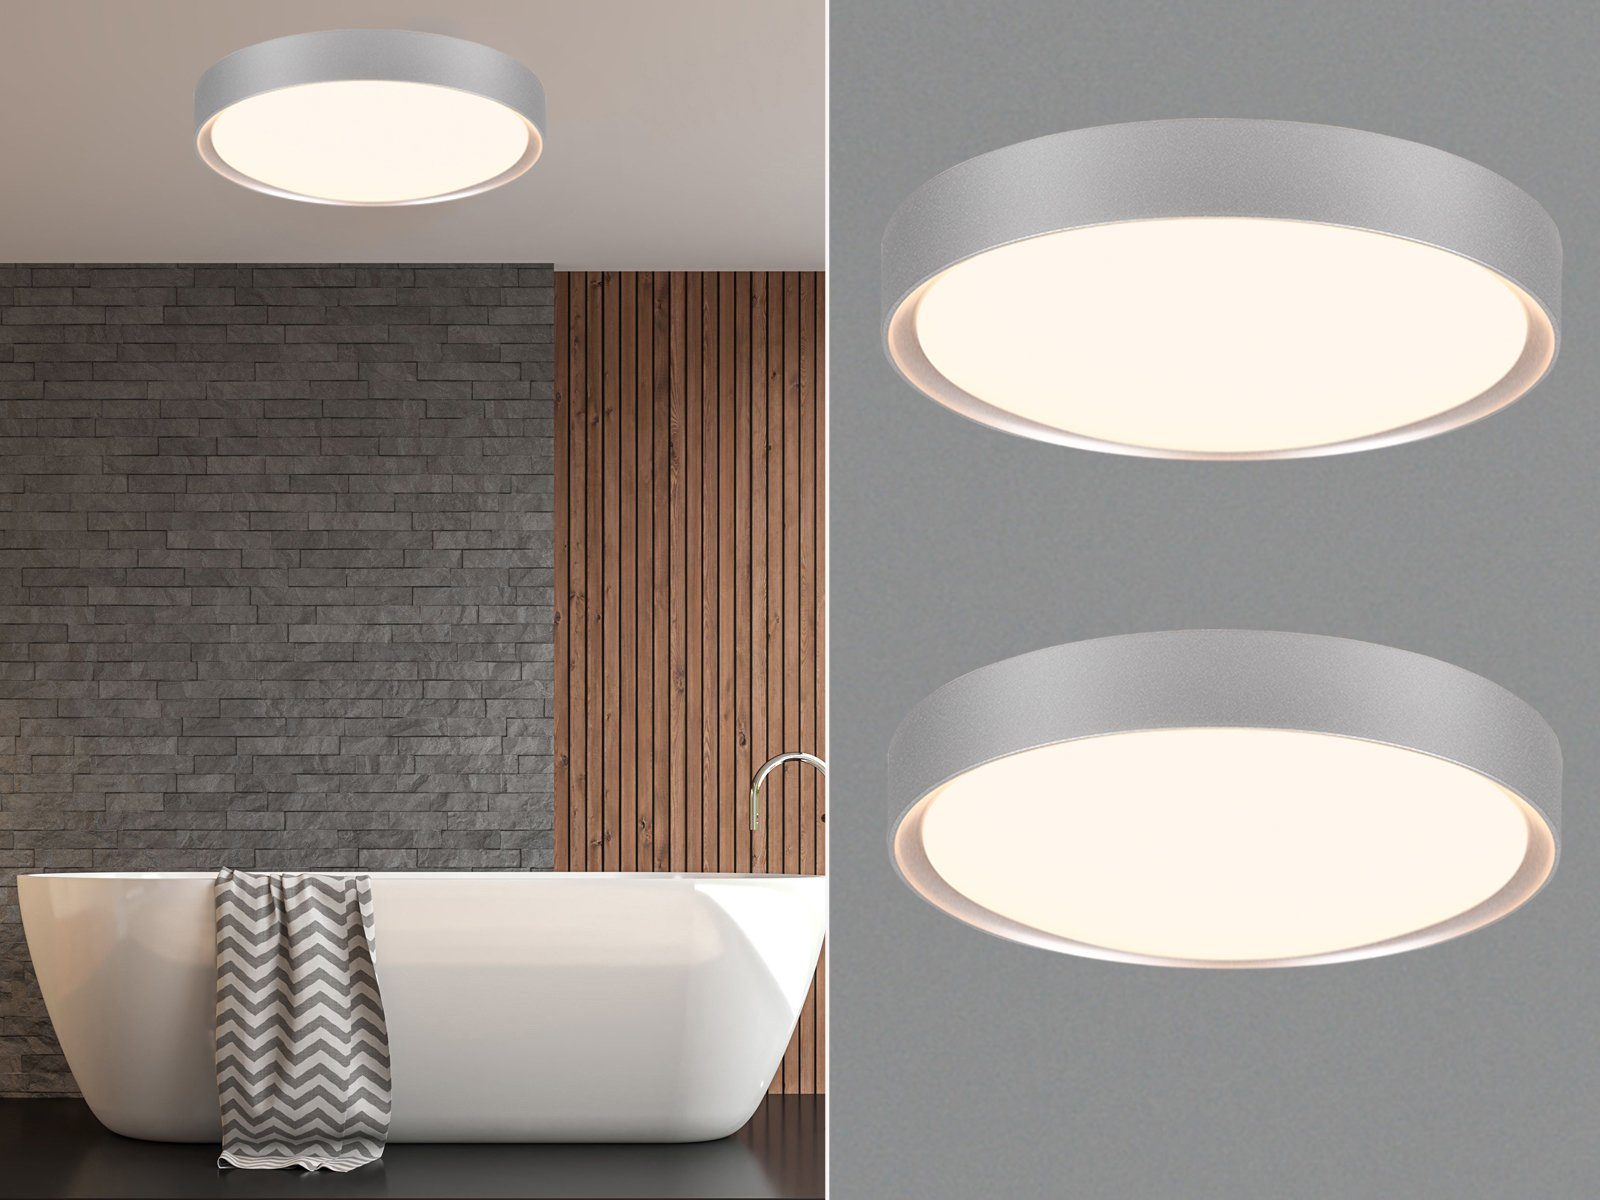 LED Wohn Schlaf Bade Zimmer Beleuchtung Design Bad Lampen Decken Leuchte Silber 